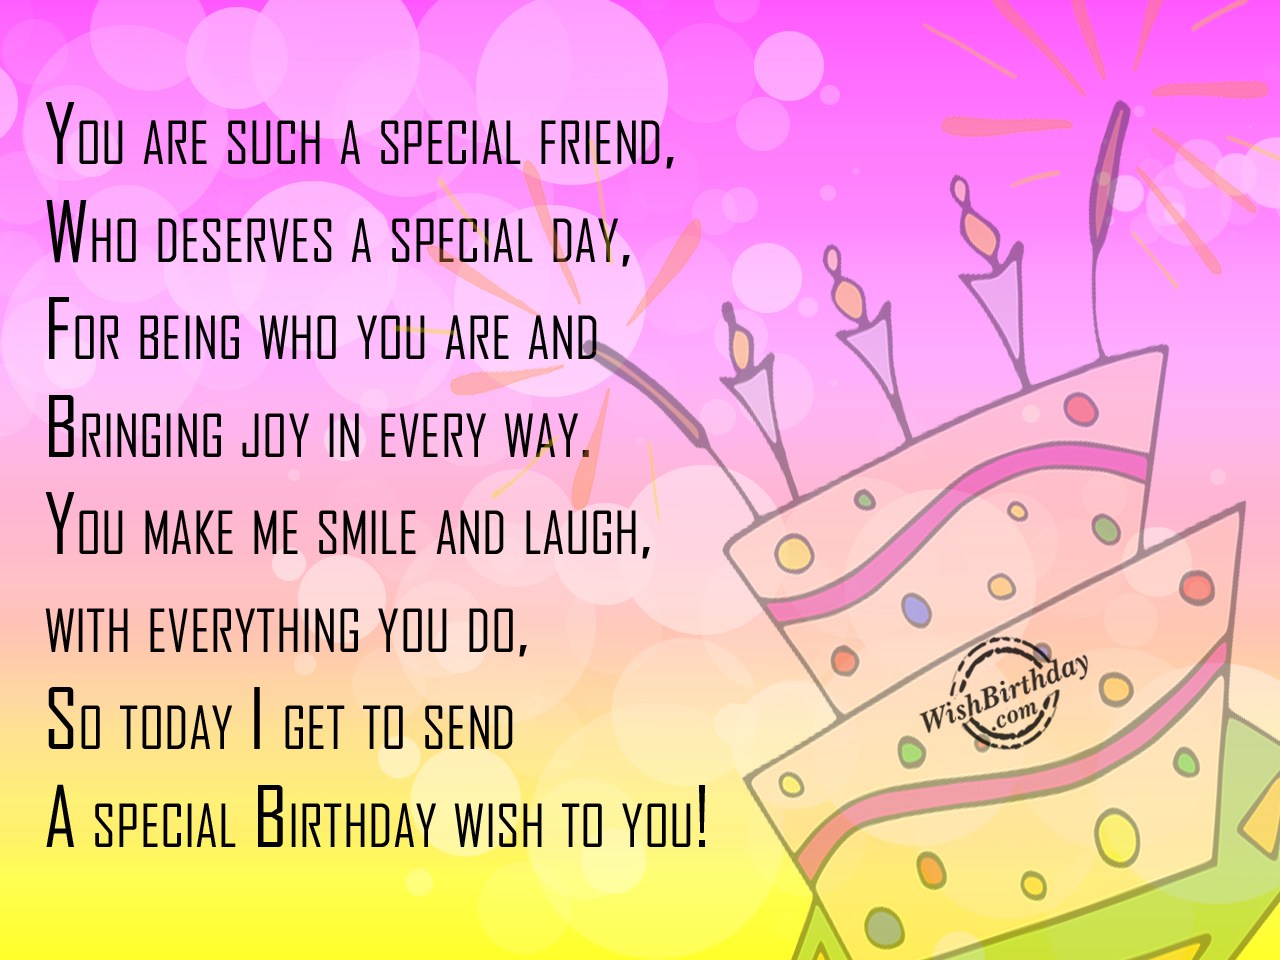 A Special Birthday Wish - WishBirthday.com